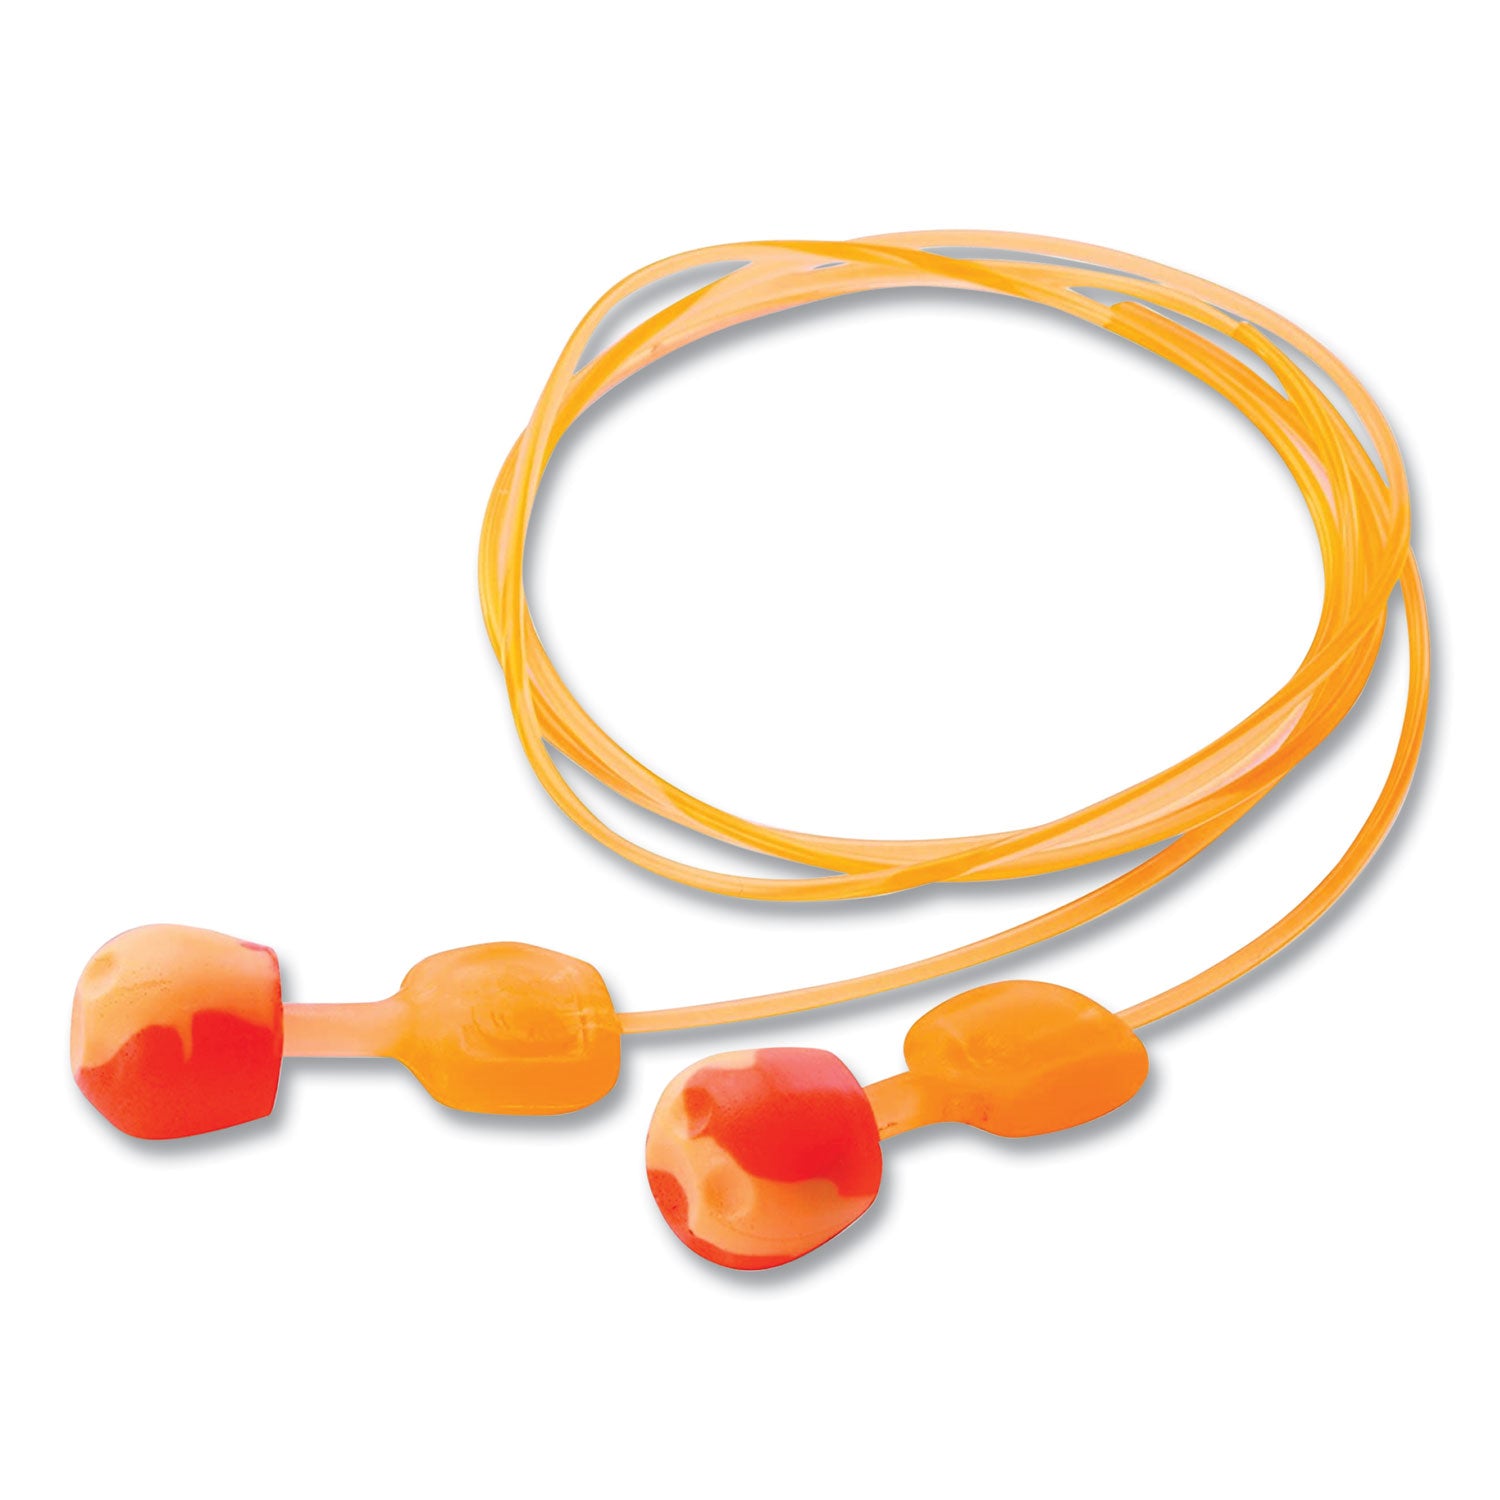 trustfit-pod-corded-reusable-foam-earplugs-one-size-fits-most-28-db-nrr-orange-1000-carton_howtrstfitpod30 - 1